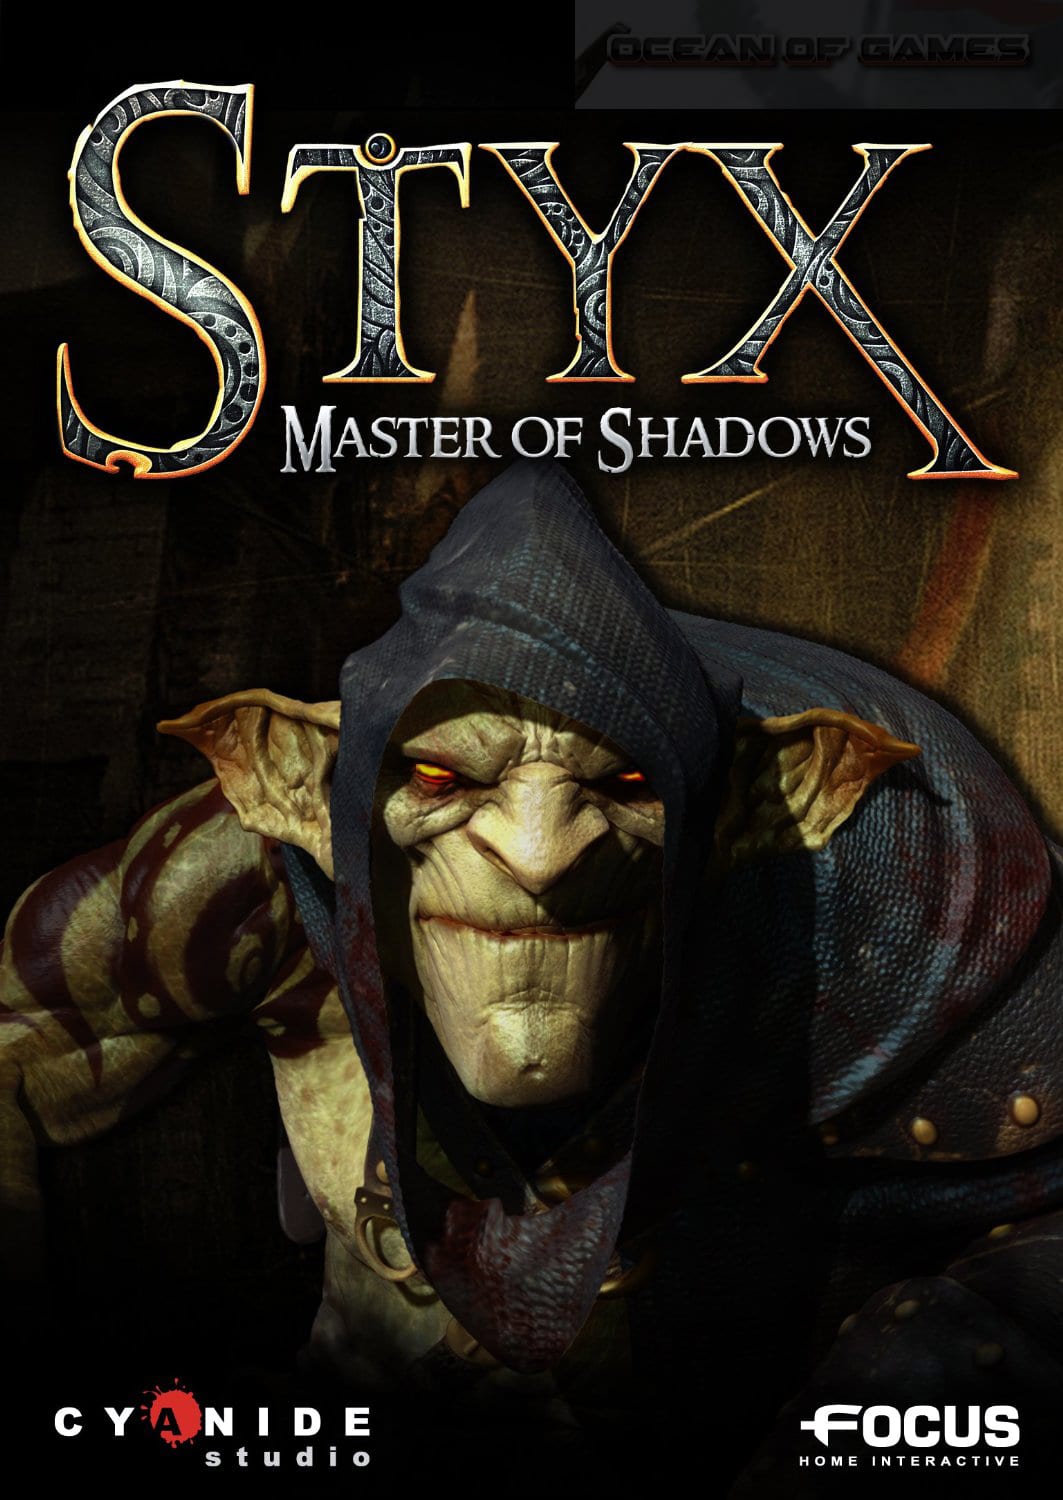 free download styx master of darkness